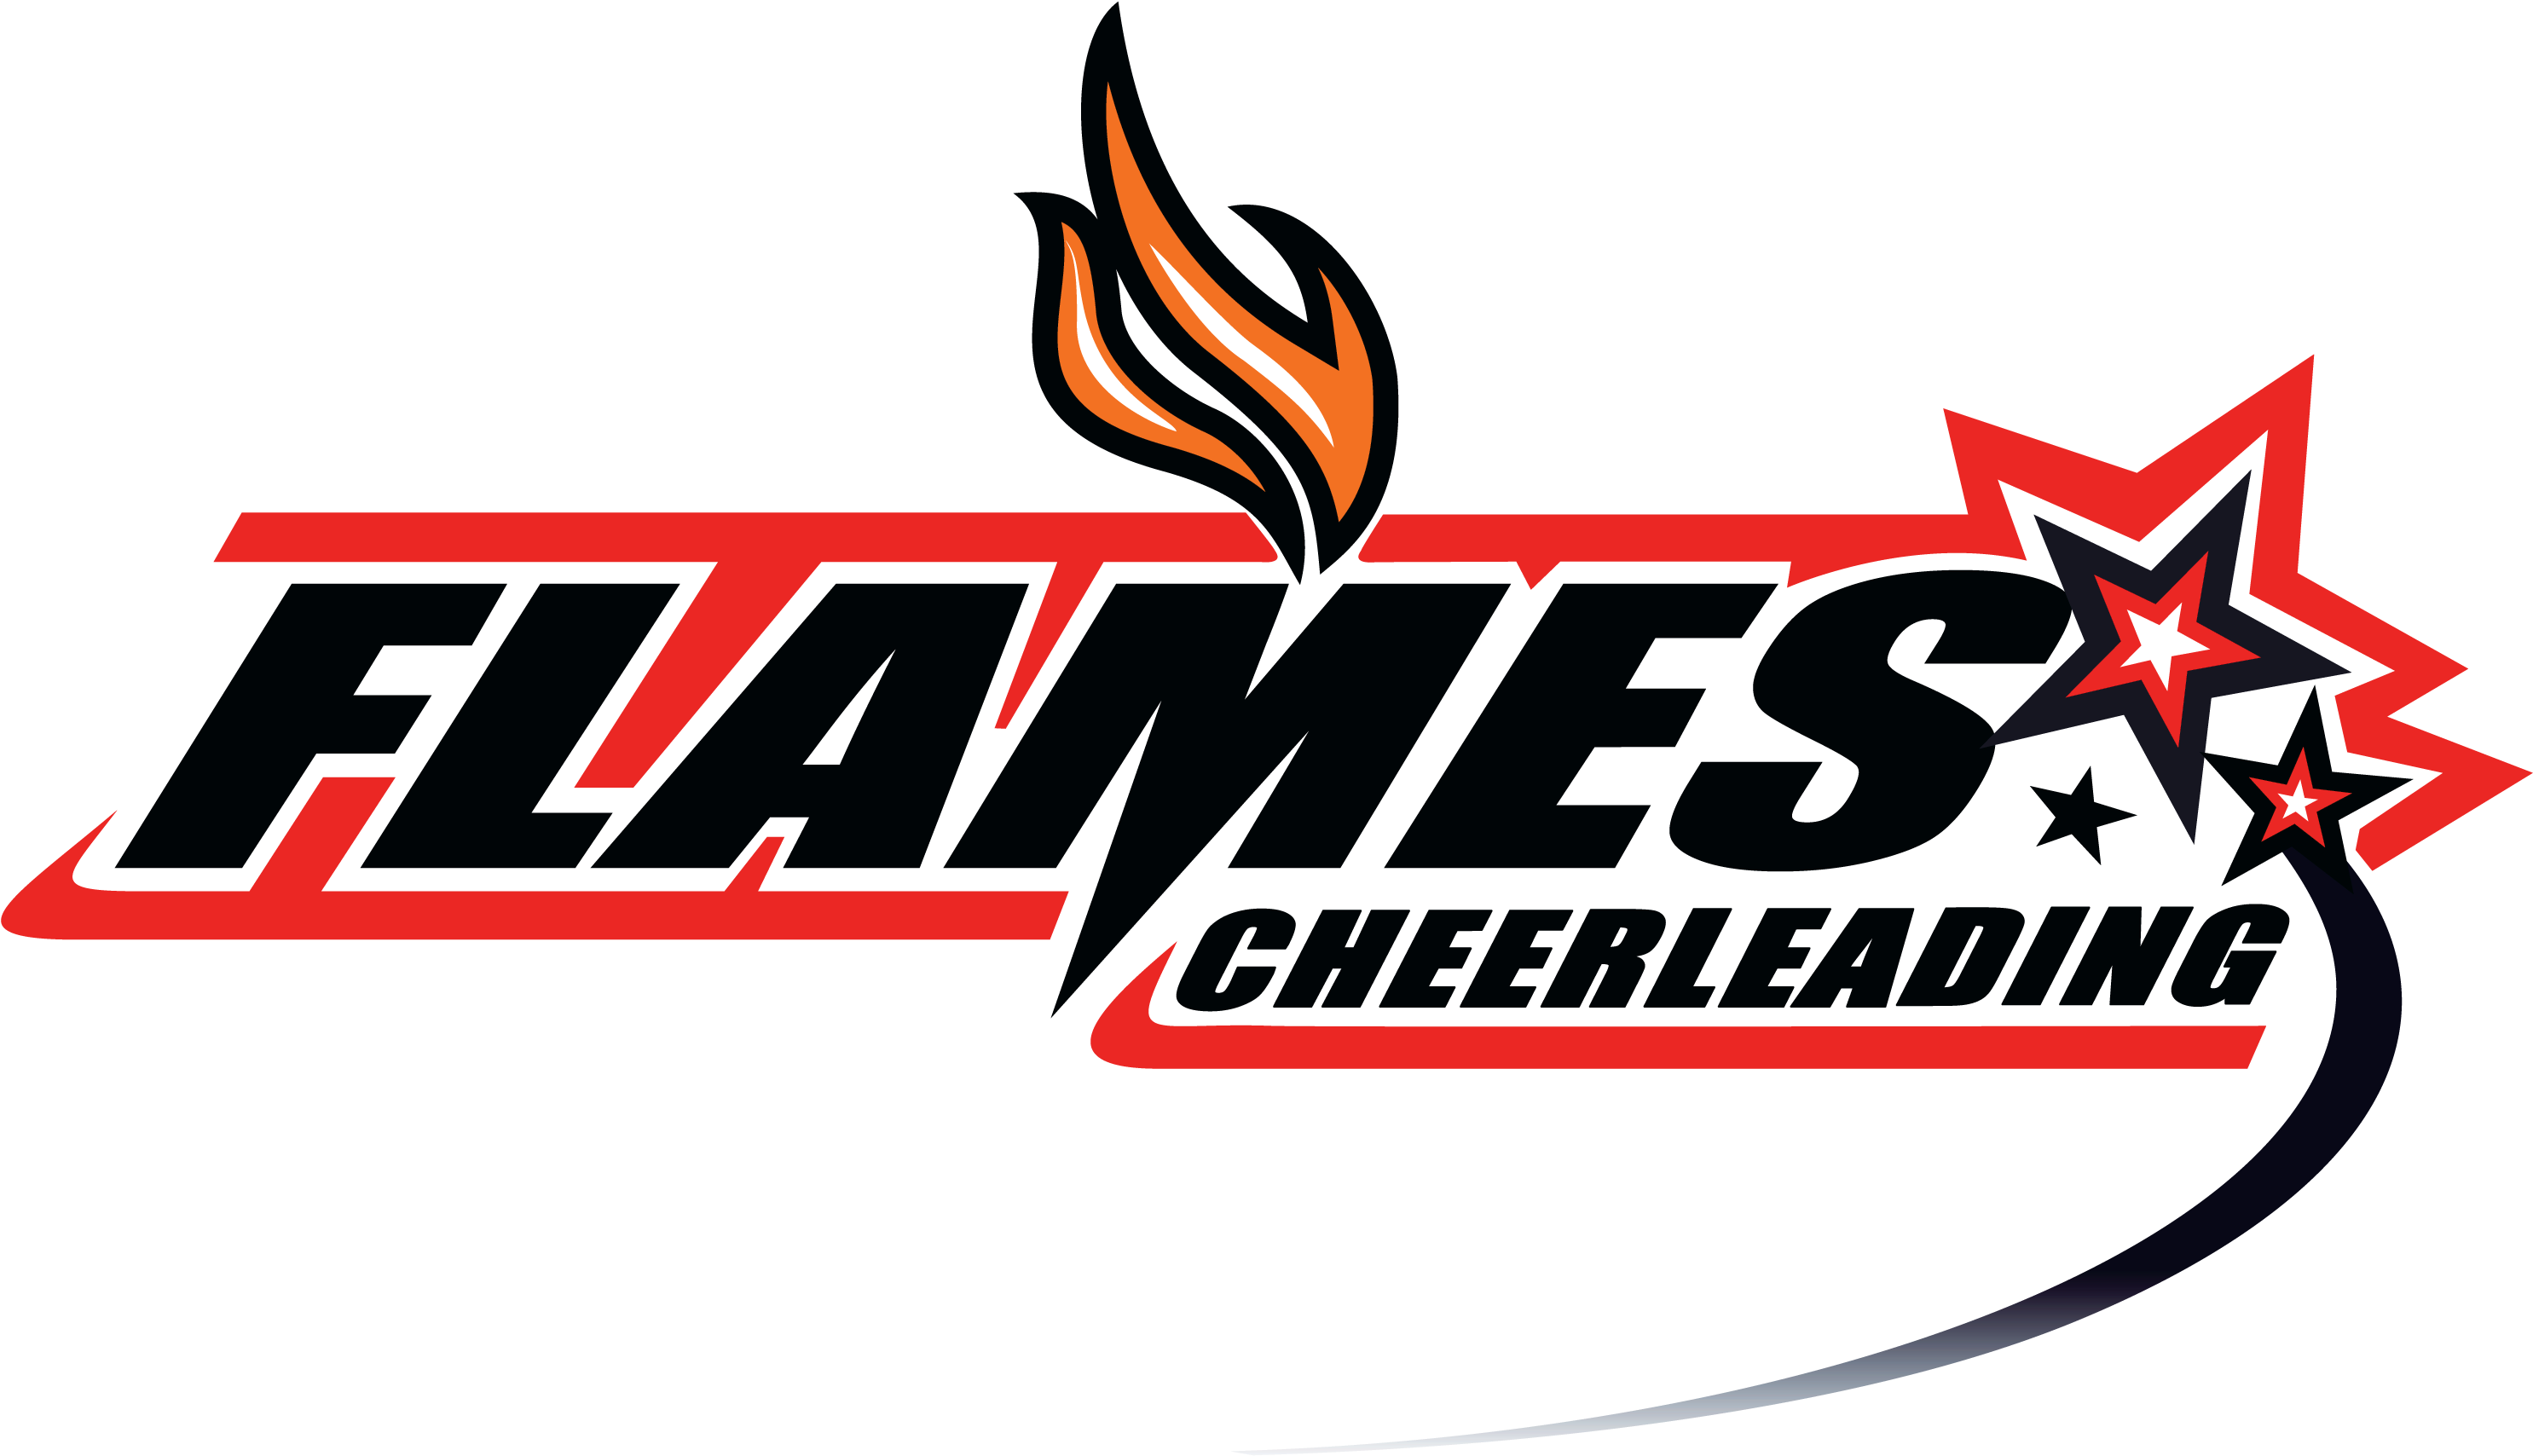 Flames Cheerleading Cheerleading Compétitif Et Récréatif - Flames All Star Cheerleading (3000x1800)